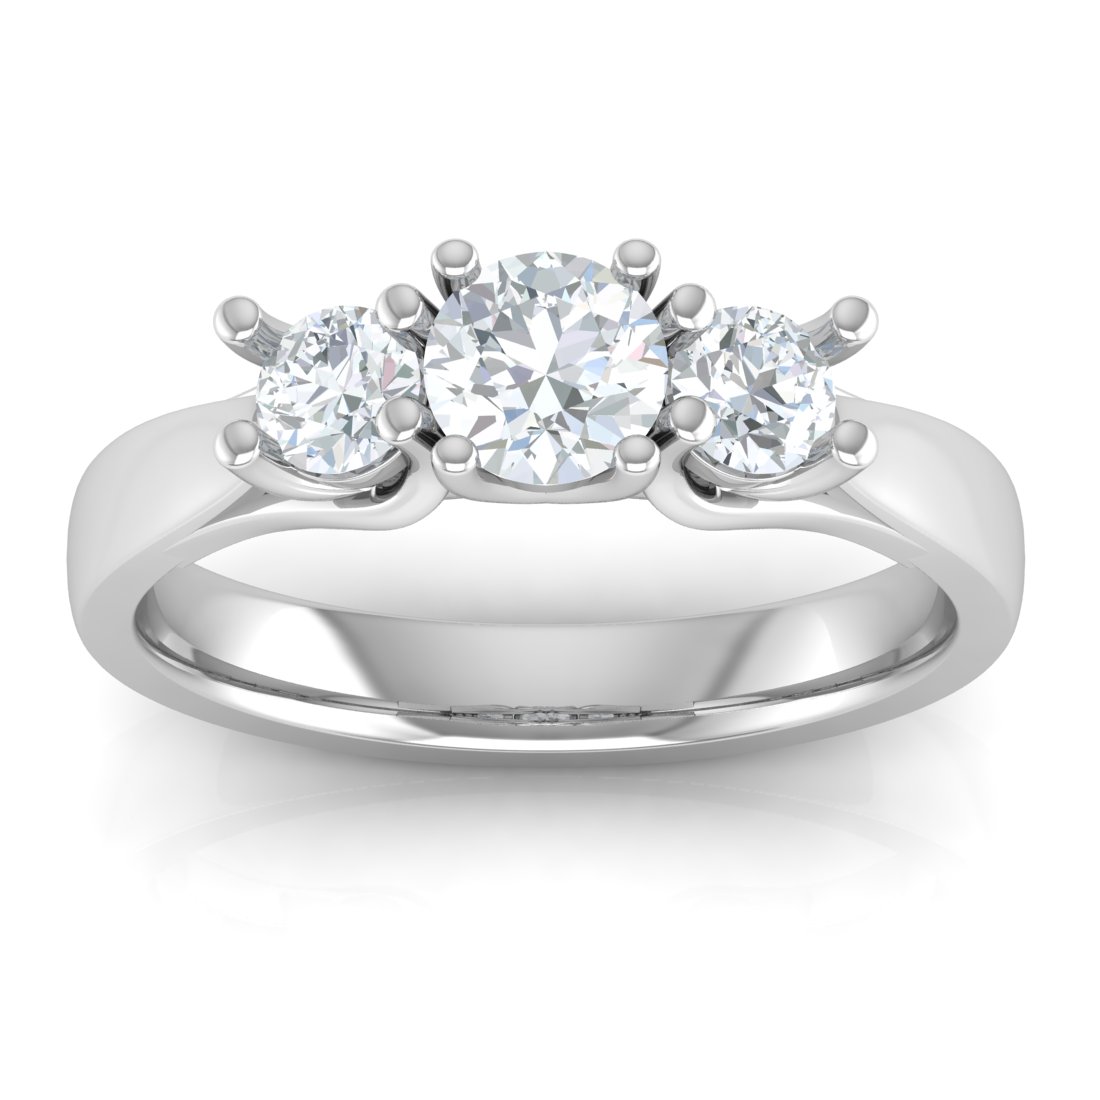 Engagement ring guide | Three stone diamond ring